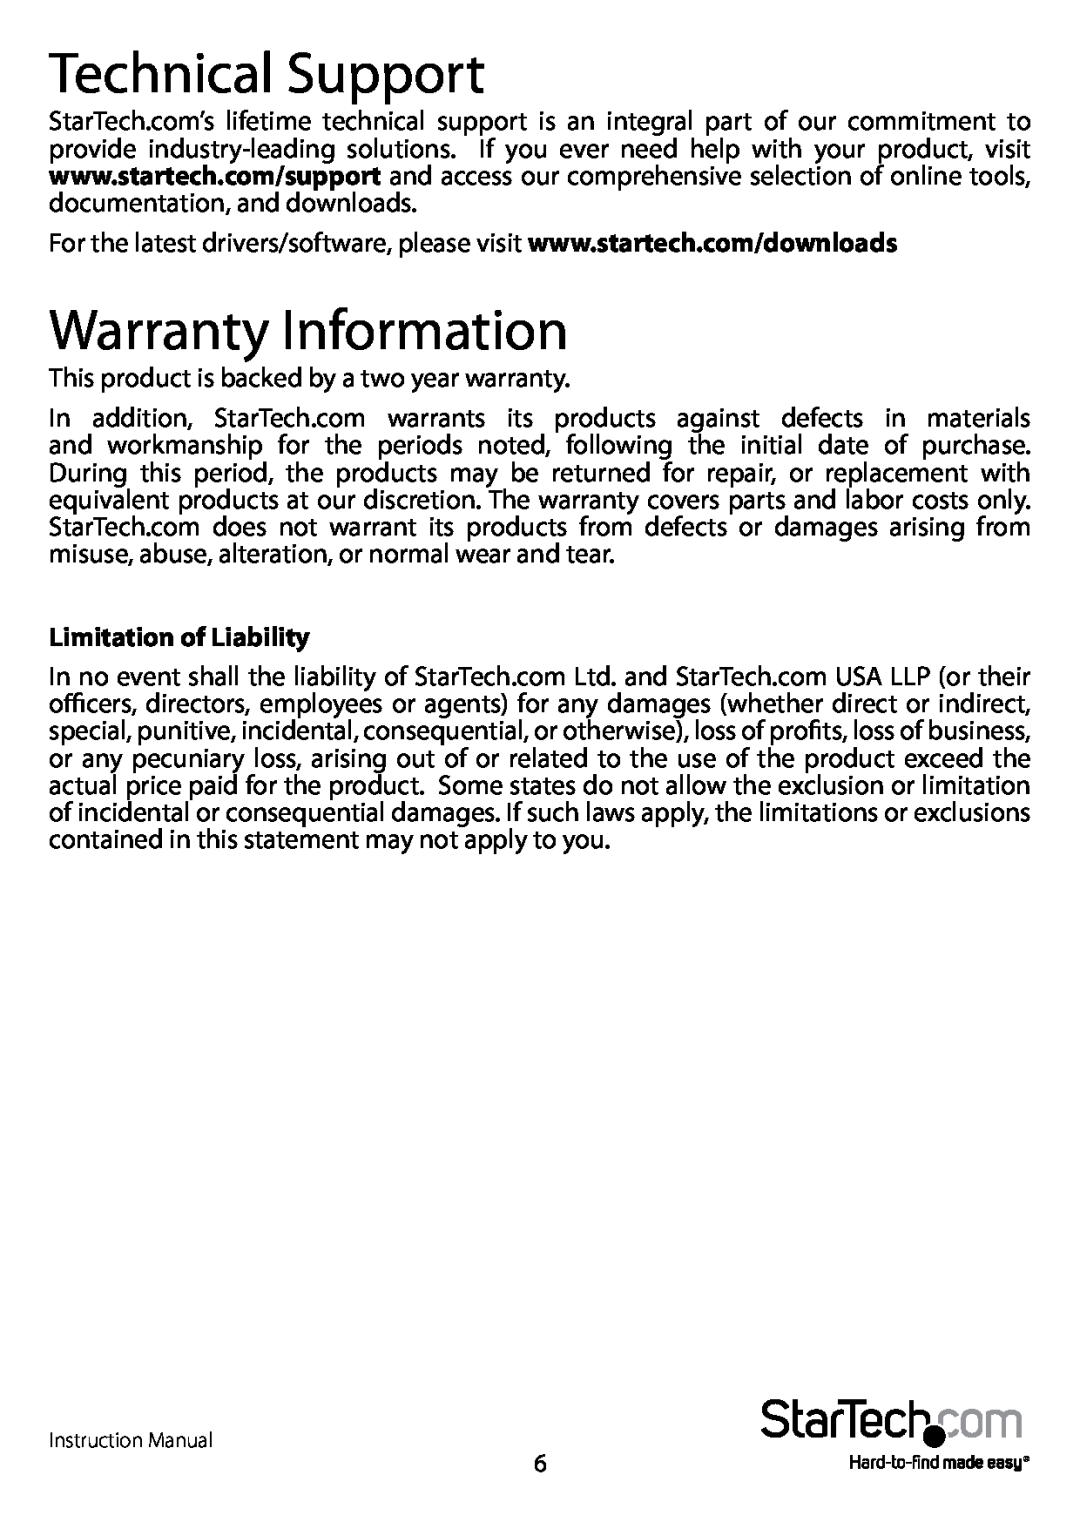 StarTech.com S3510BMU33T, S3510WMU33T manual Technical Support, Warranty Information, Limitation of Liability 